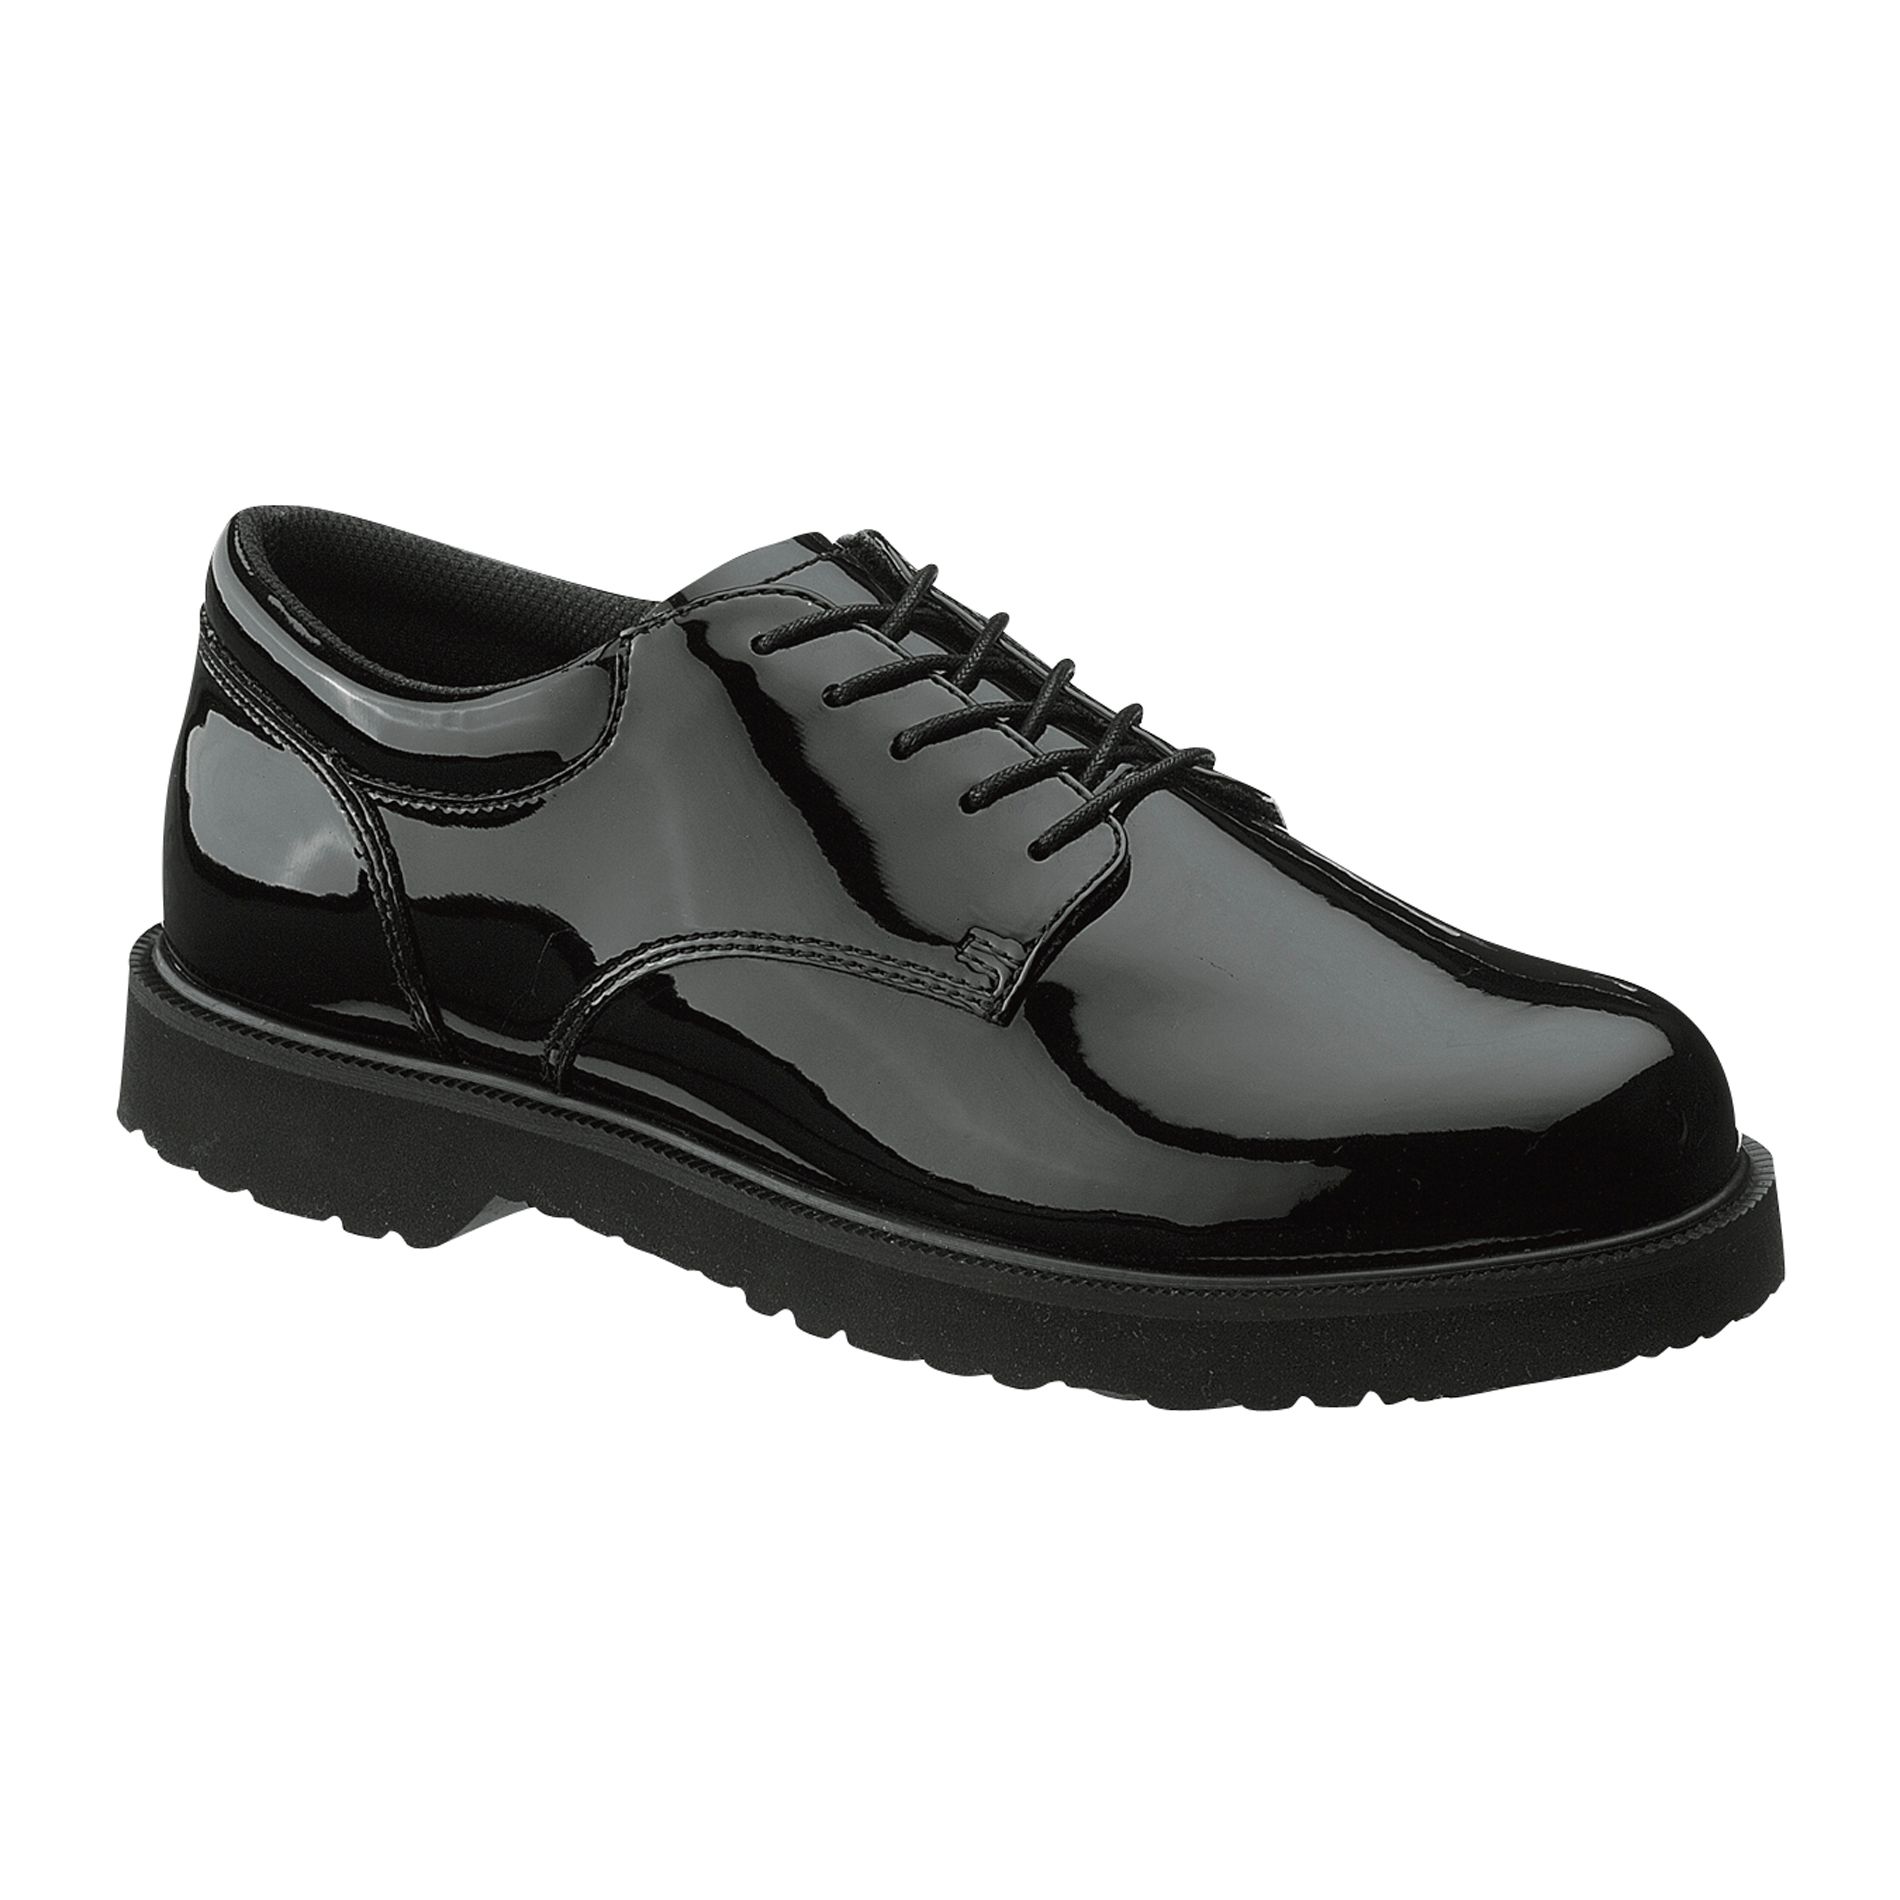 Men's Work Shoe Duty Oxford Black Patent 22141 Wide Avail